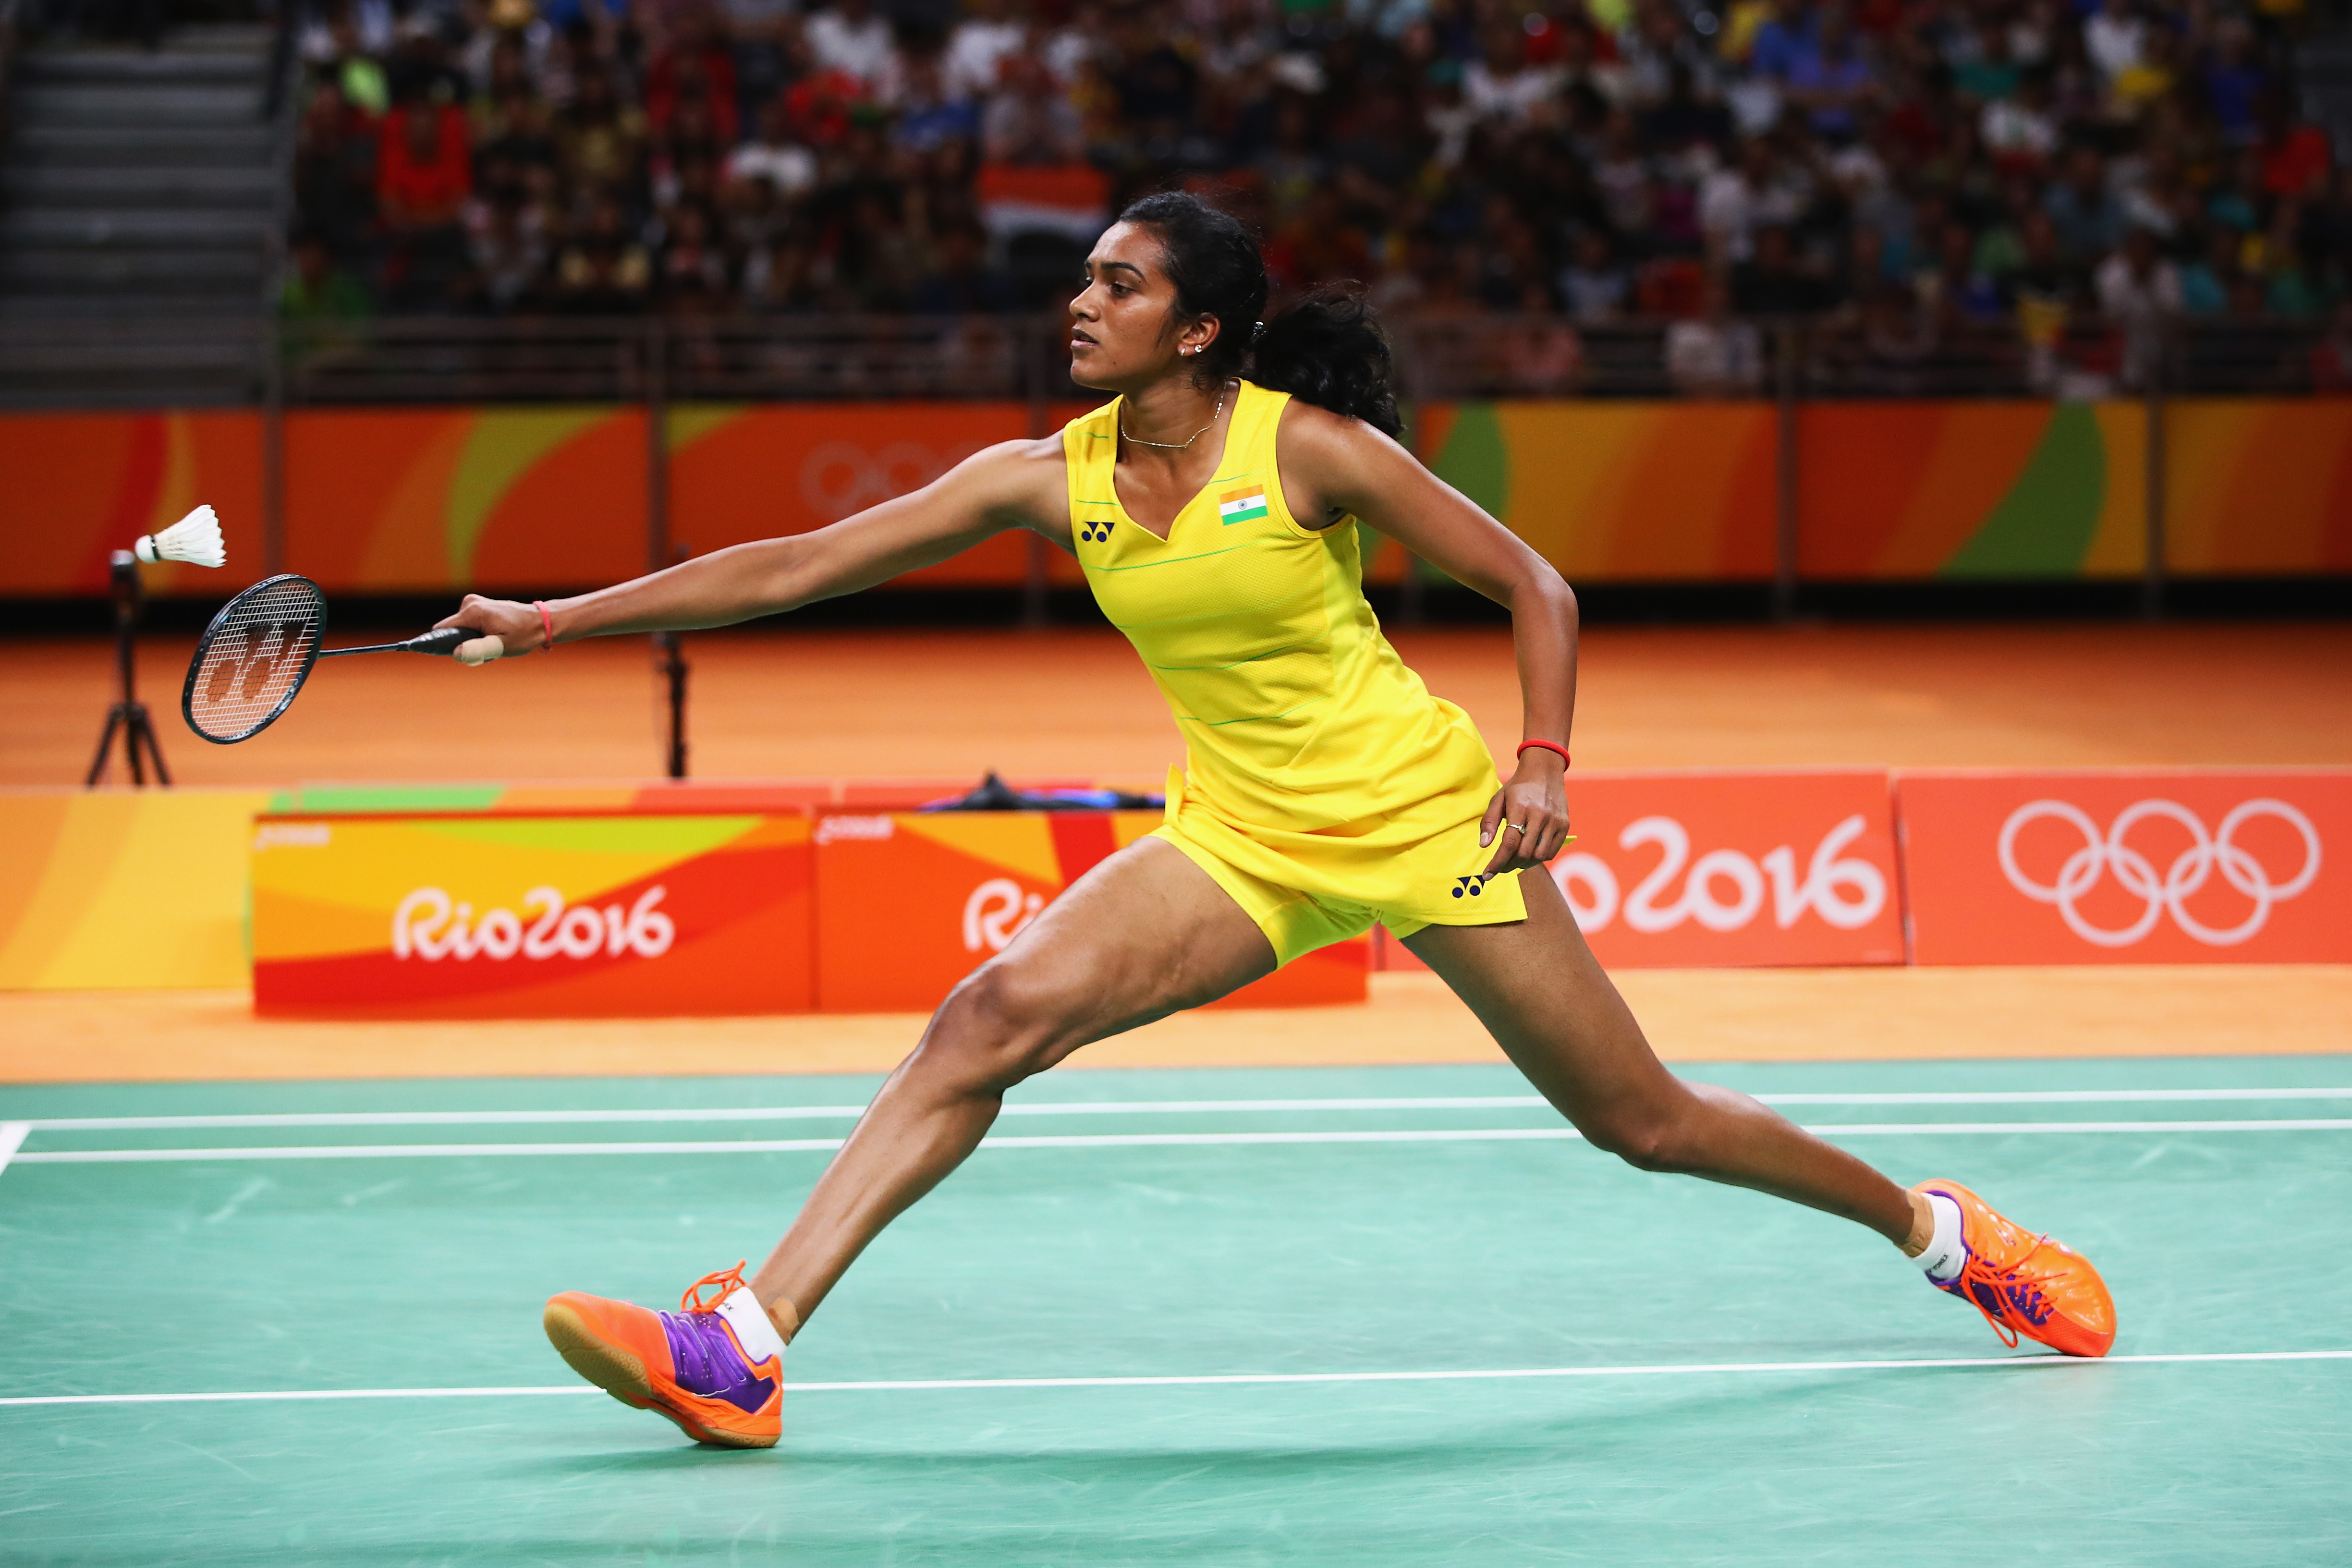 Rio 2016 | PV Sindhu provides silver lining; Aditi Ashok struggles on day 14